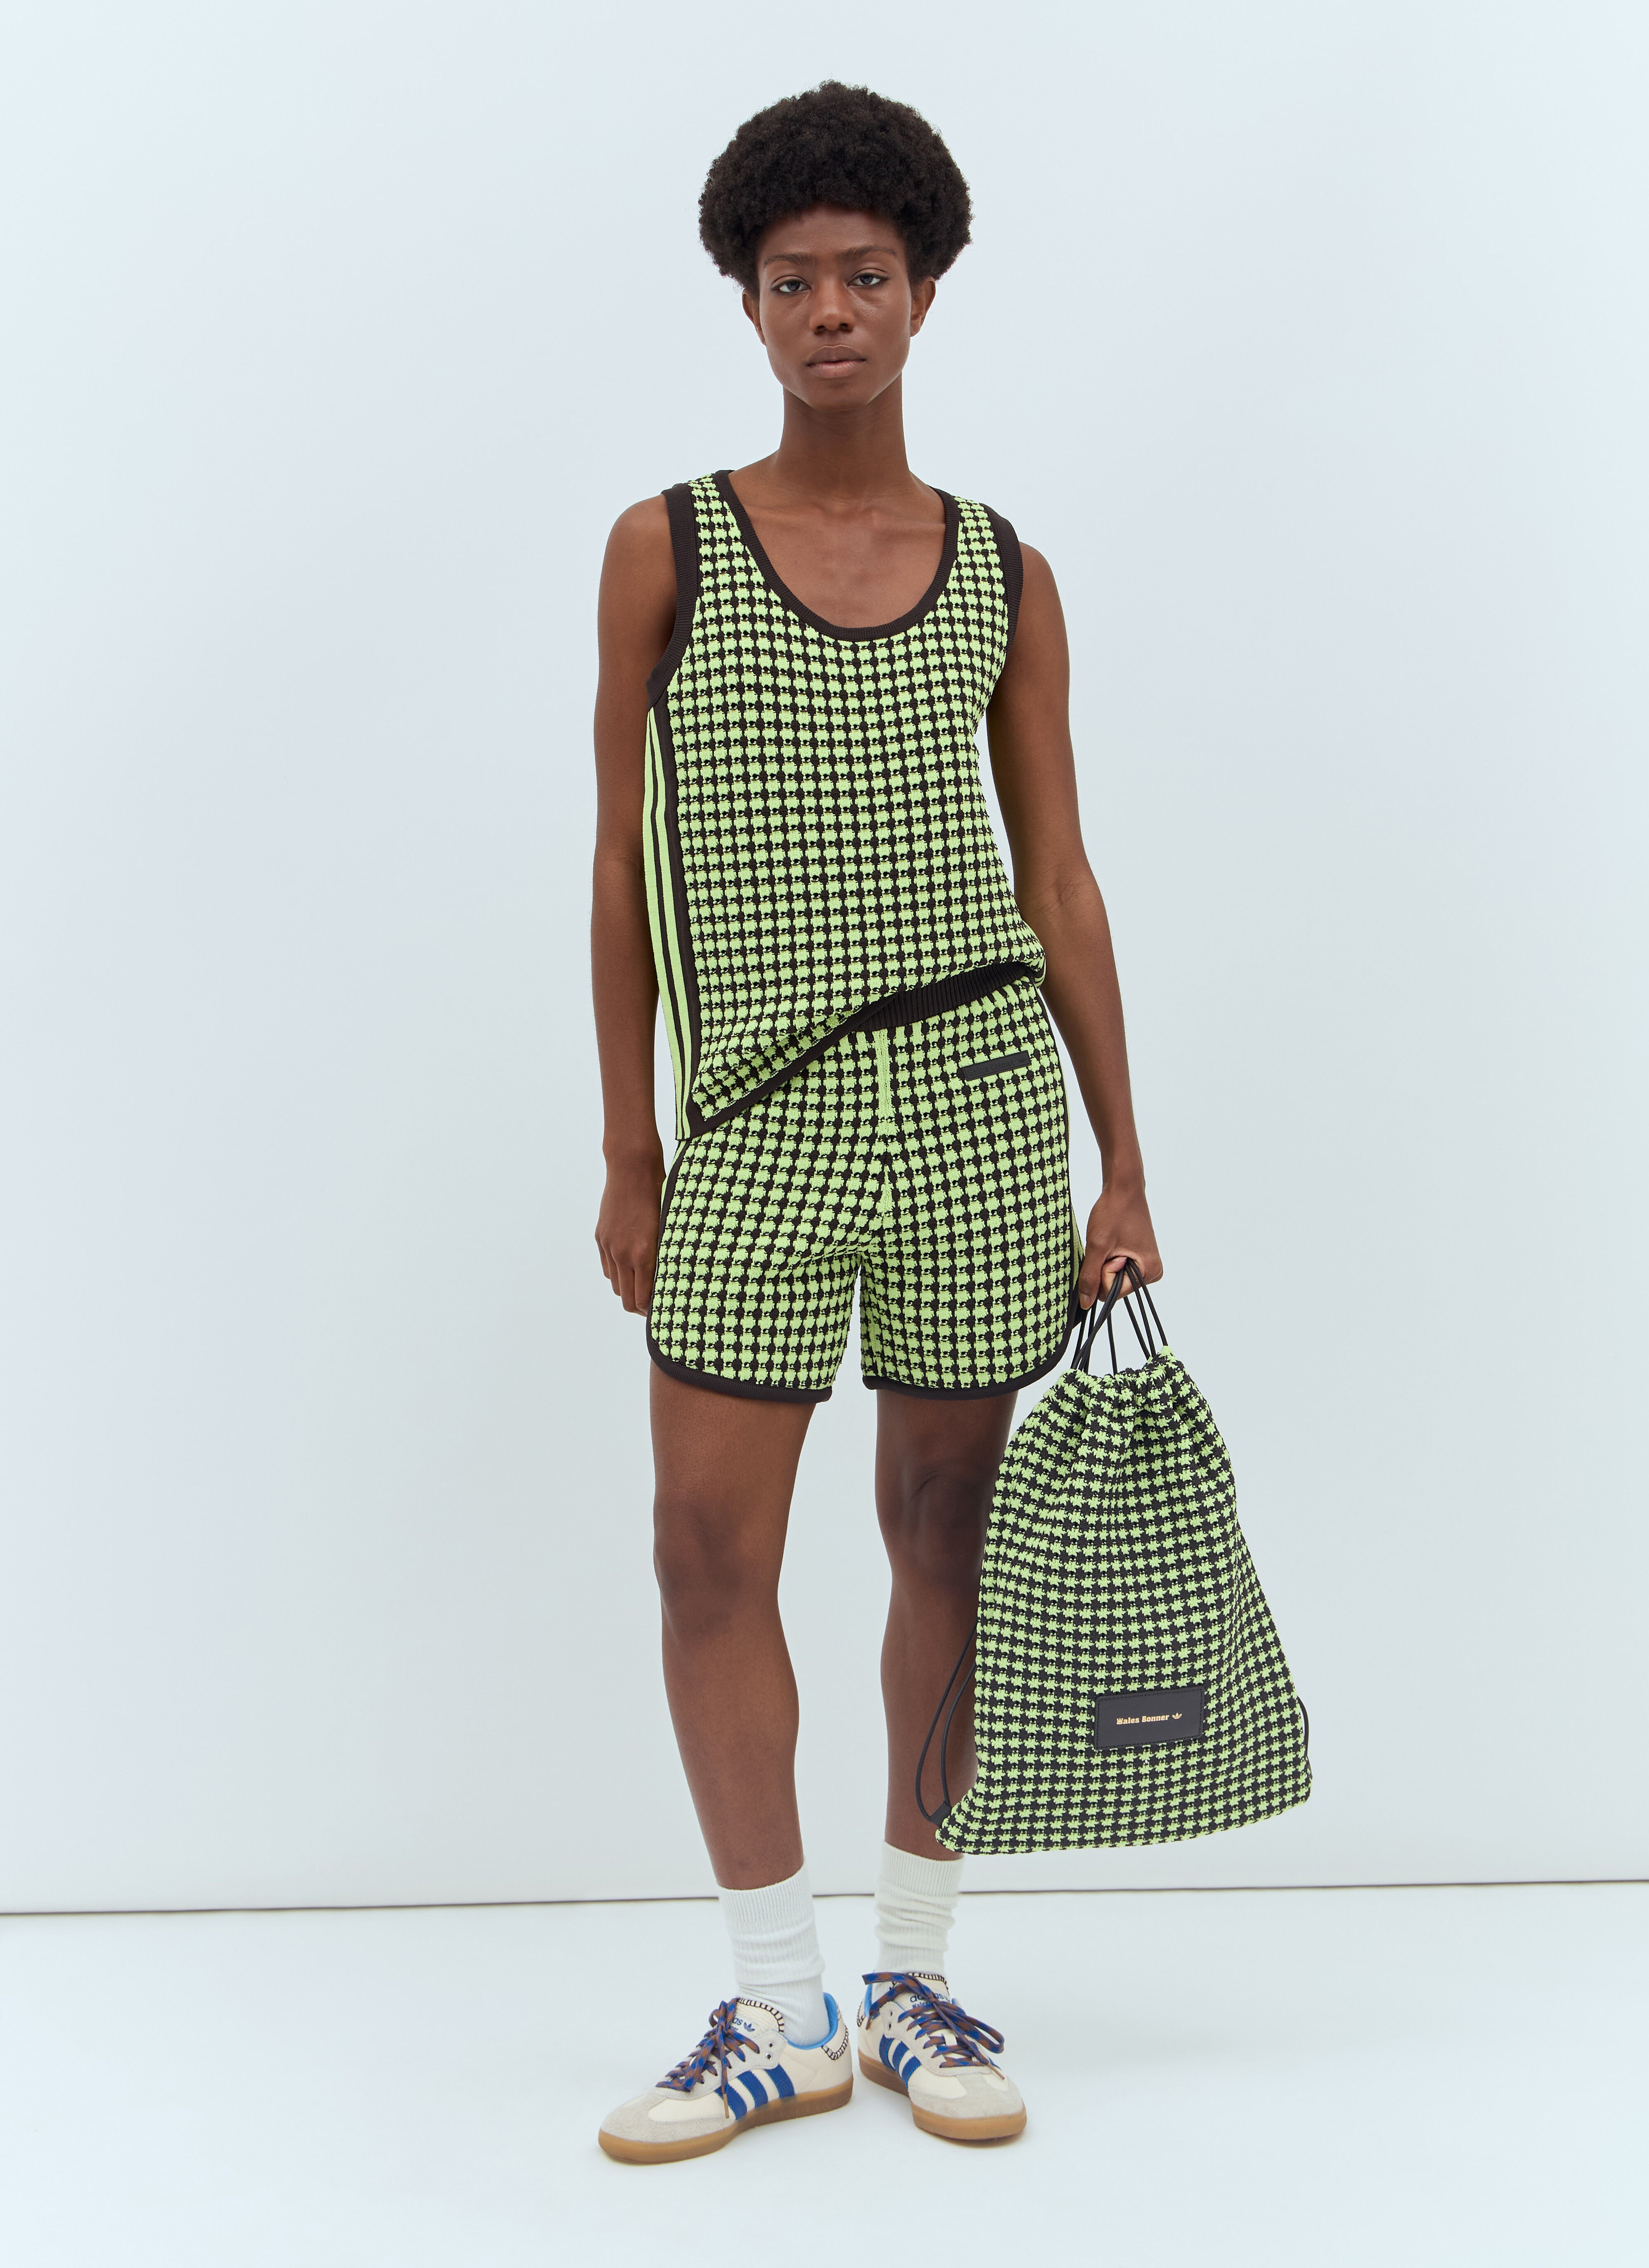 adidas by Wales Bonner Crochet Drawstring Backpack Green awb0357001